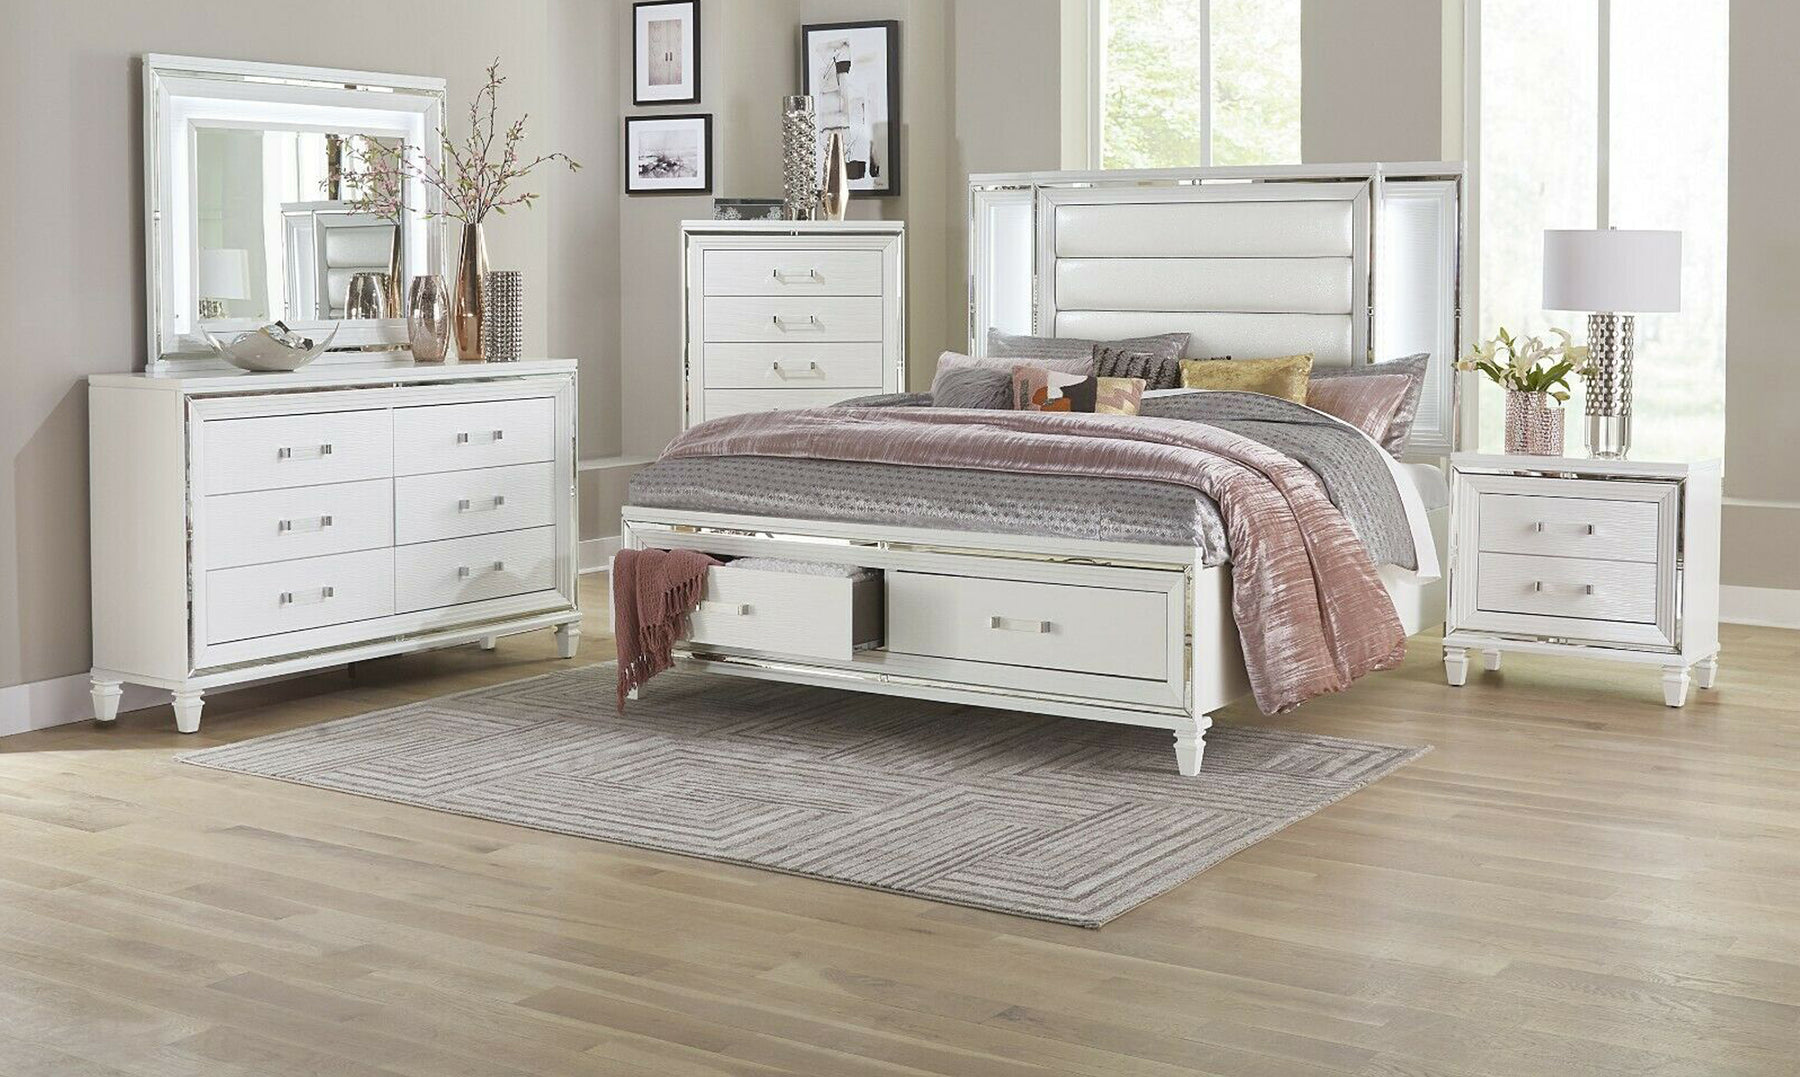 tiffany style bedroom furniture